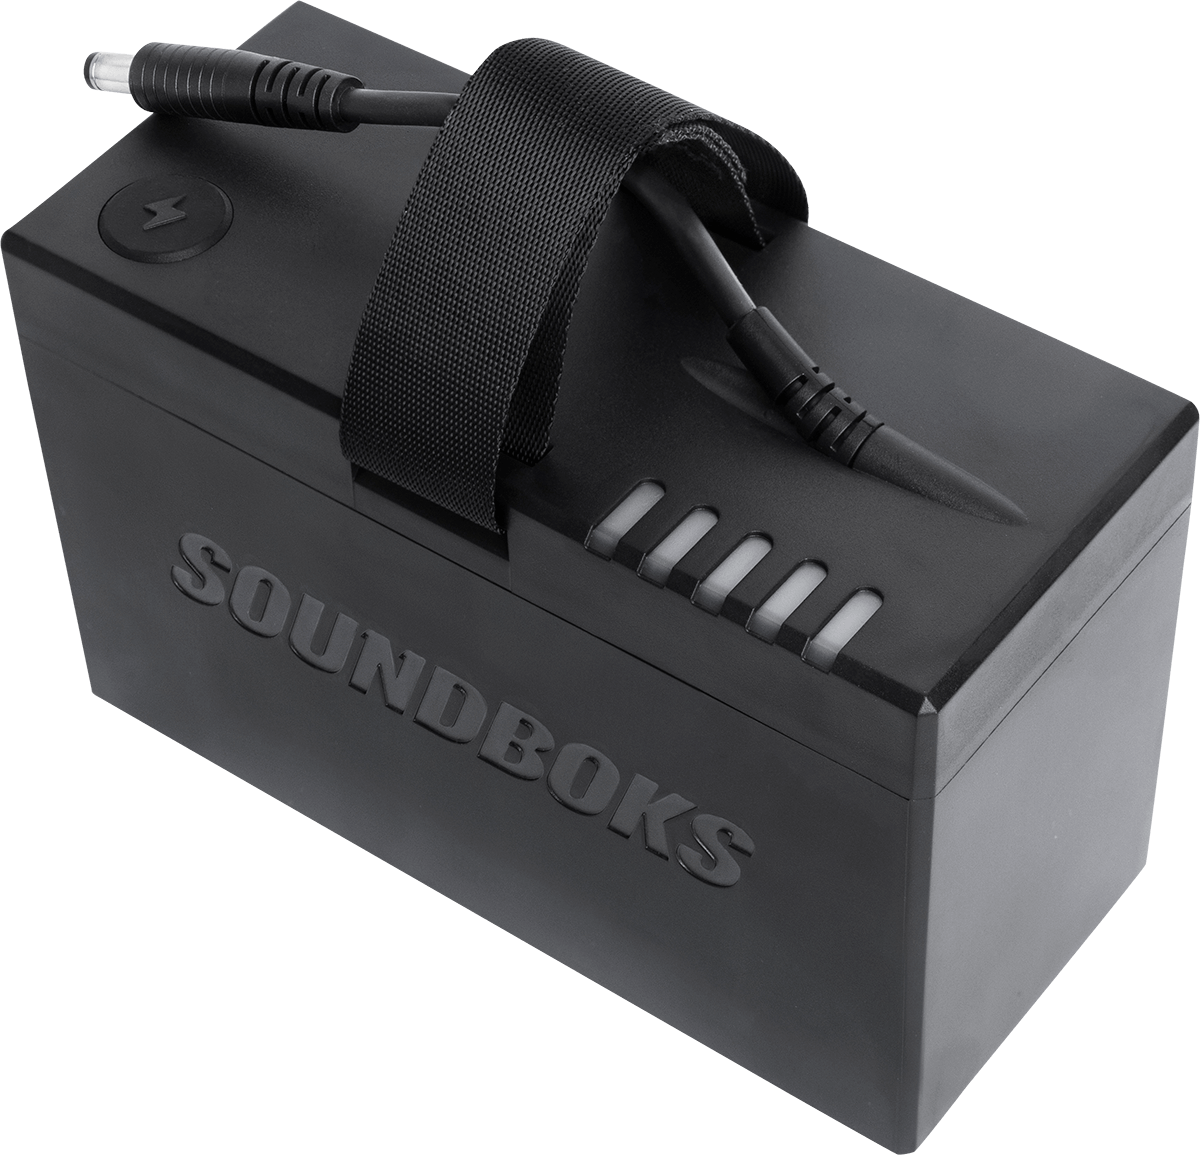 Soundboks Batterie De Rechange Pour Soundboks - Sistema de sonorización portátil - Variation 1